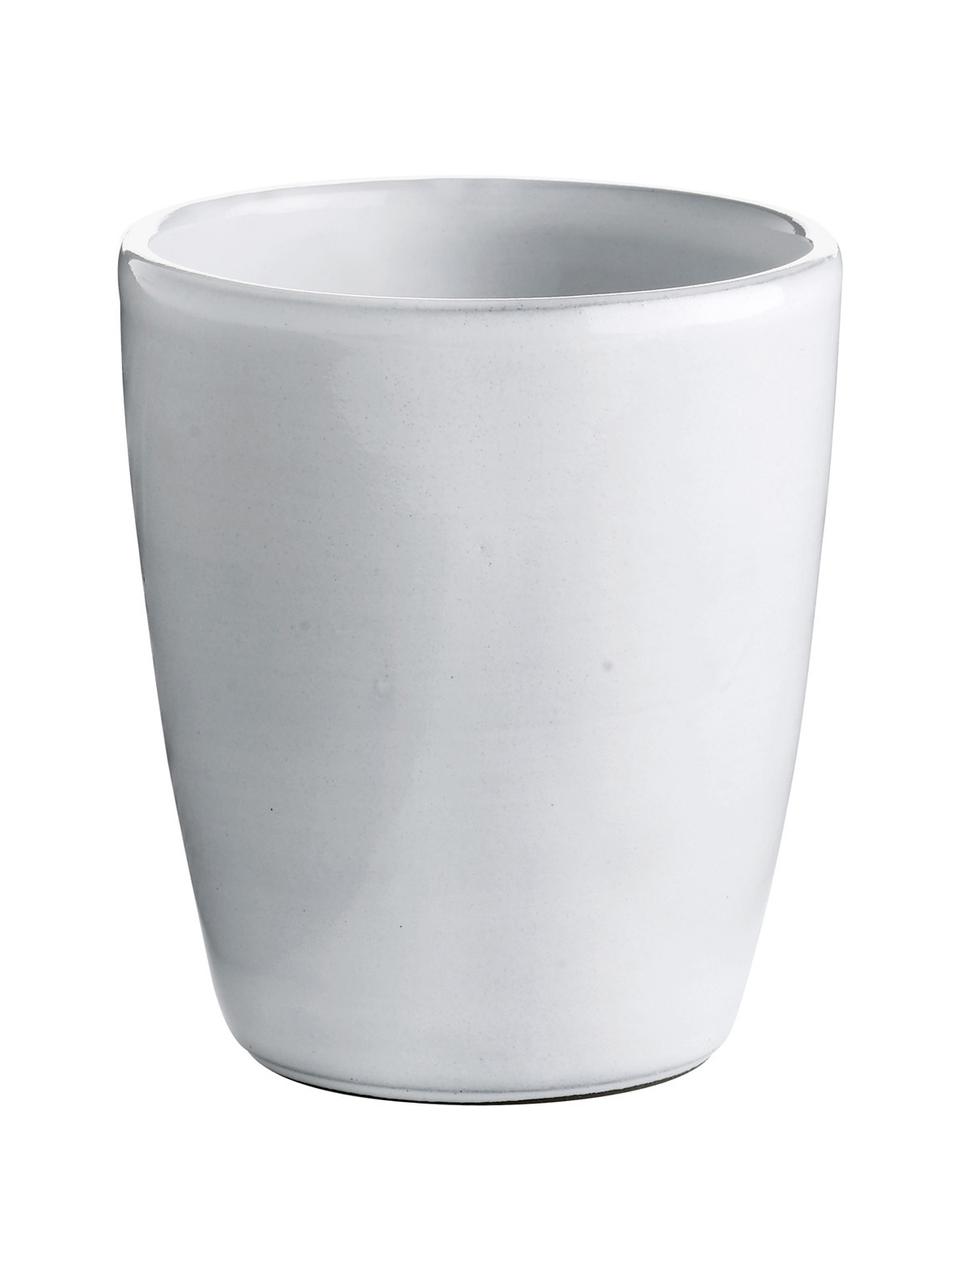 Keramik-Becher Haze in Weiß, 2 Stück, Keramik, glasiert, Weiß, Grau, Ø 10 x H 11 cm